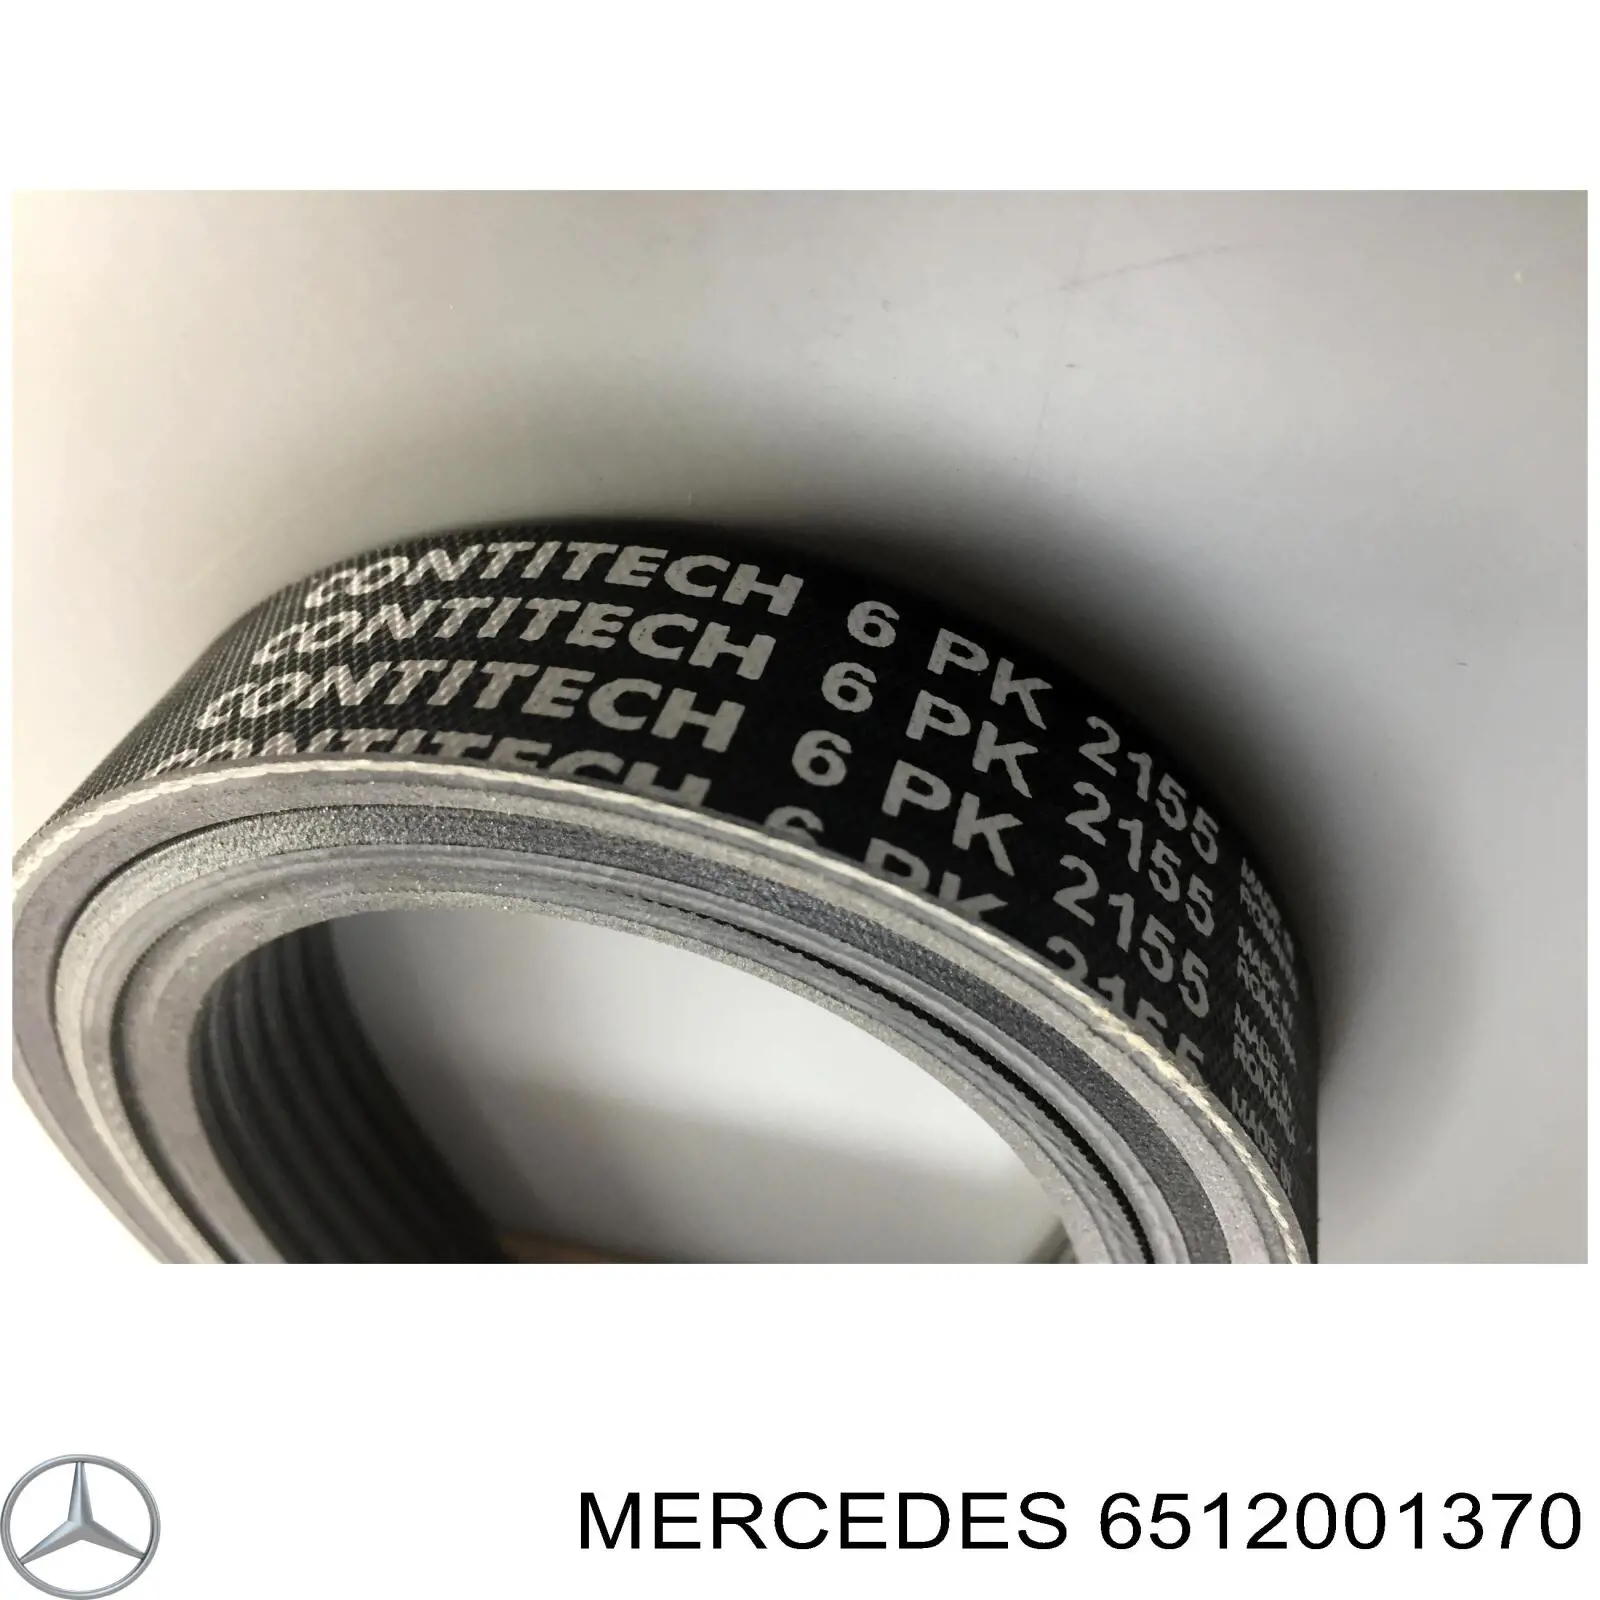 6512001370 Mercedes tensor de correa, correa poli v